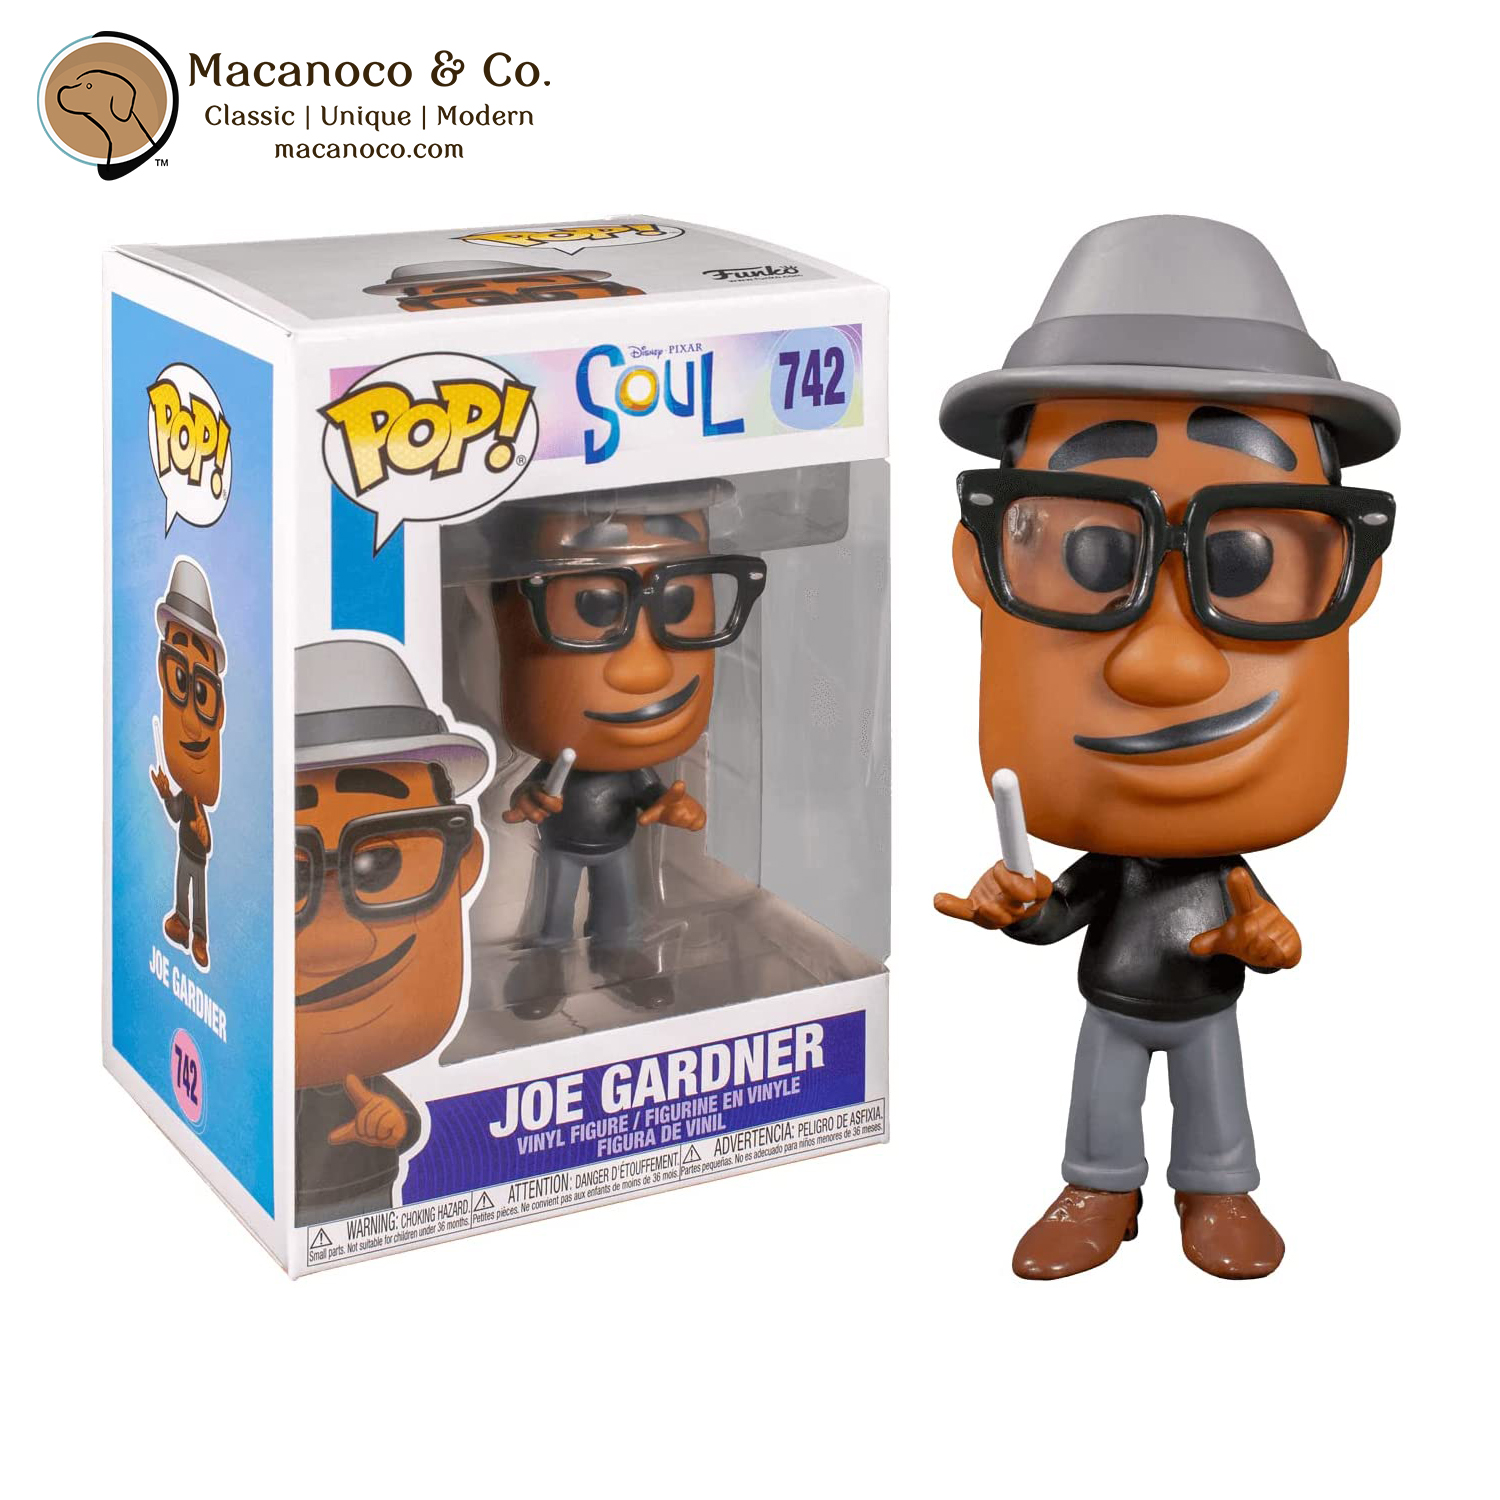 Funko Pop! Disney Pixar Soul: Joe Gardner Vinyl Toy Figure